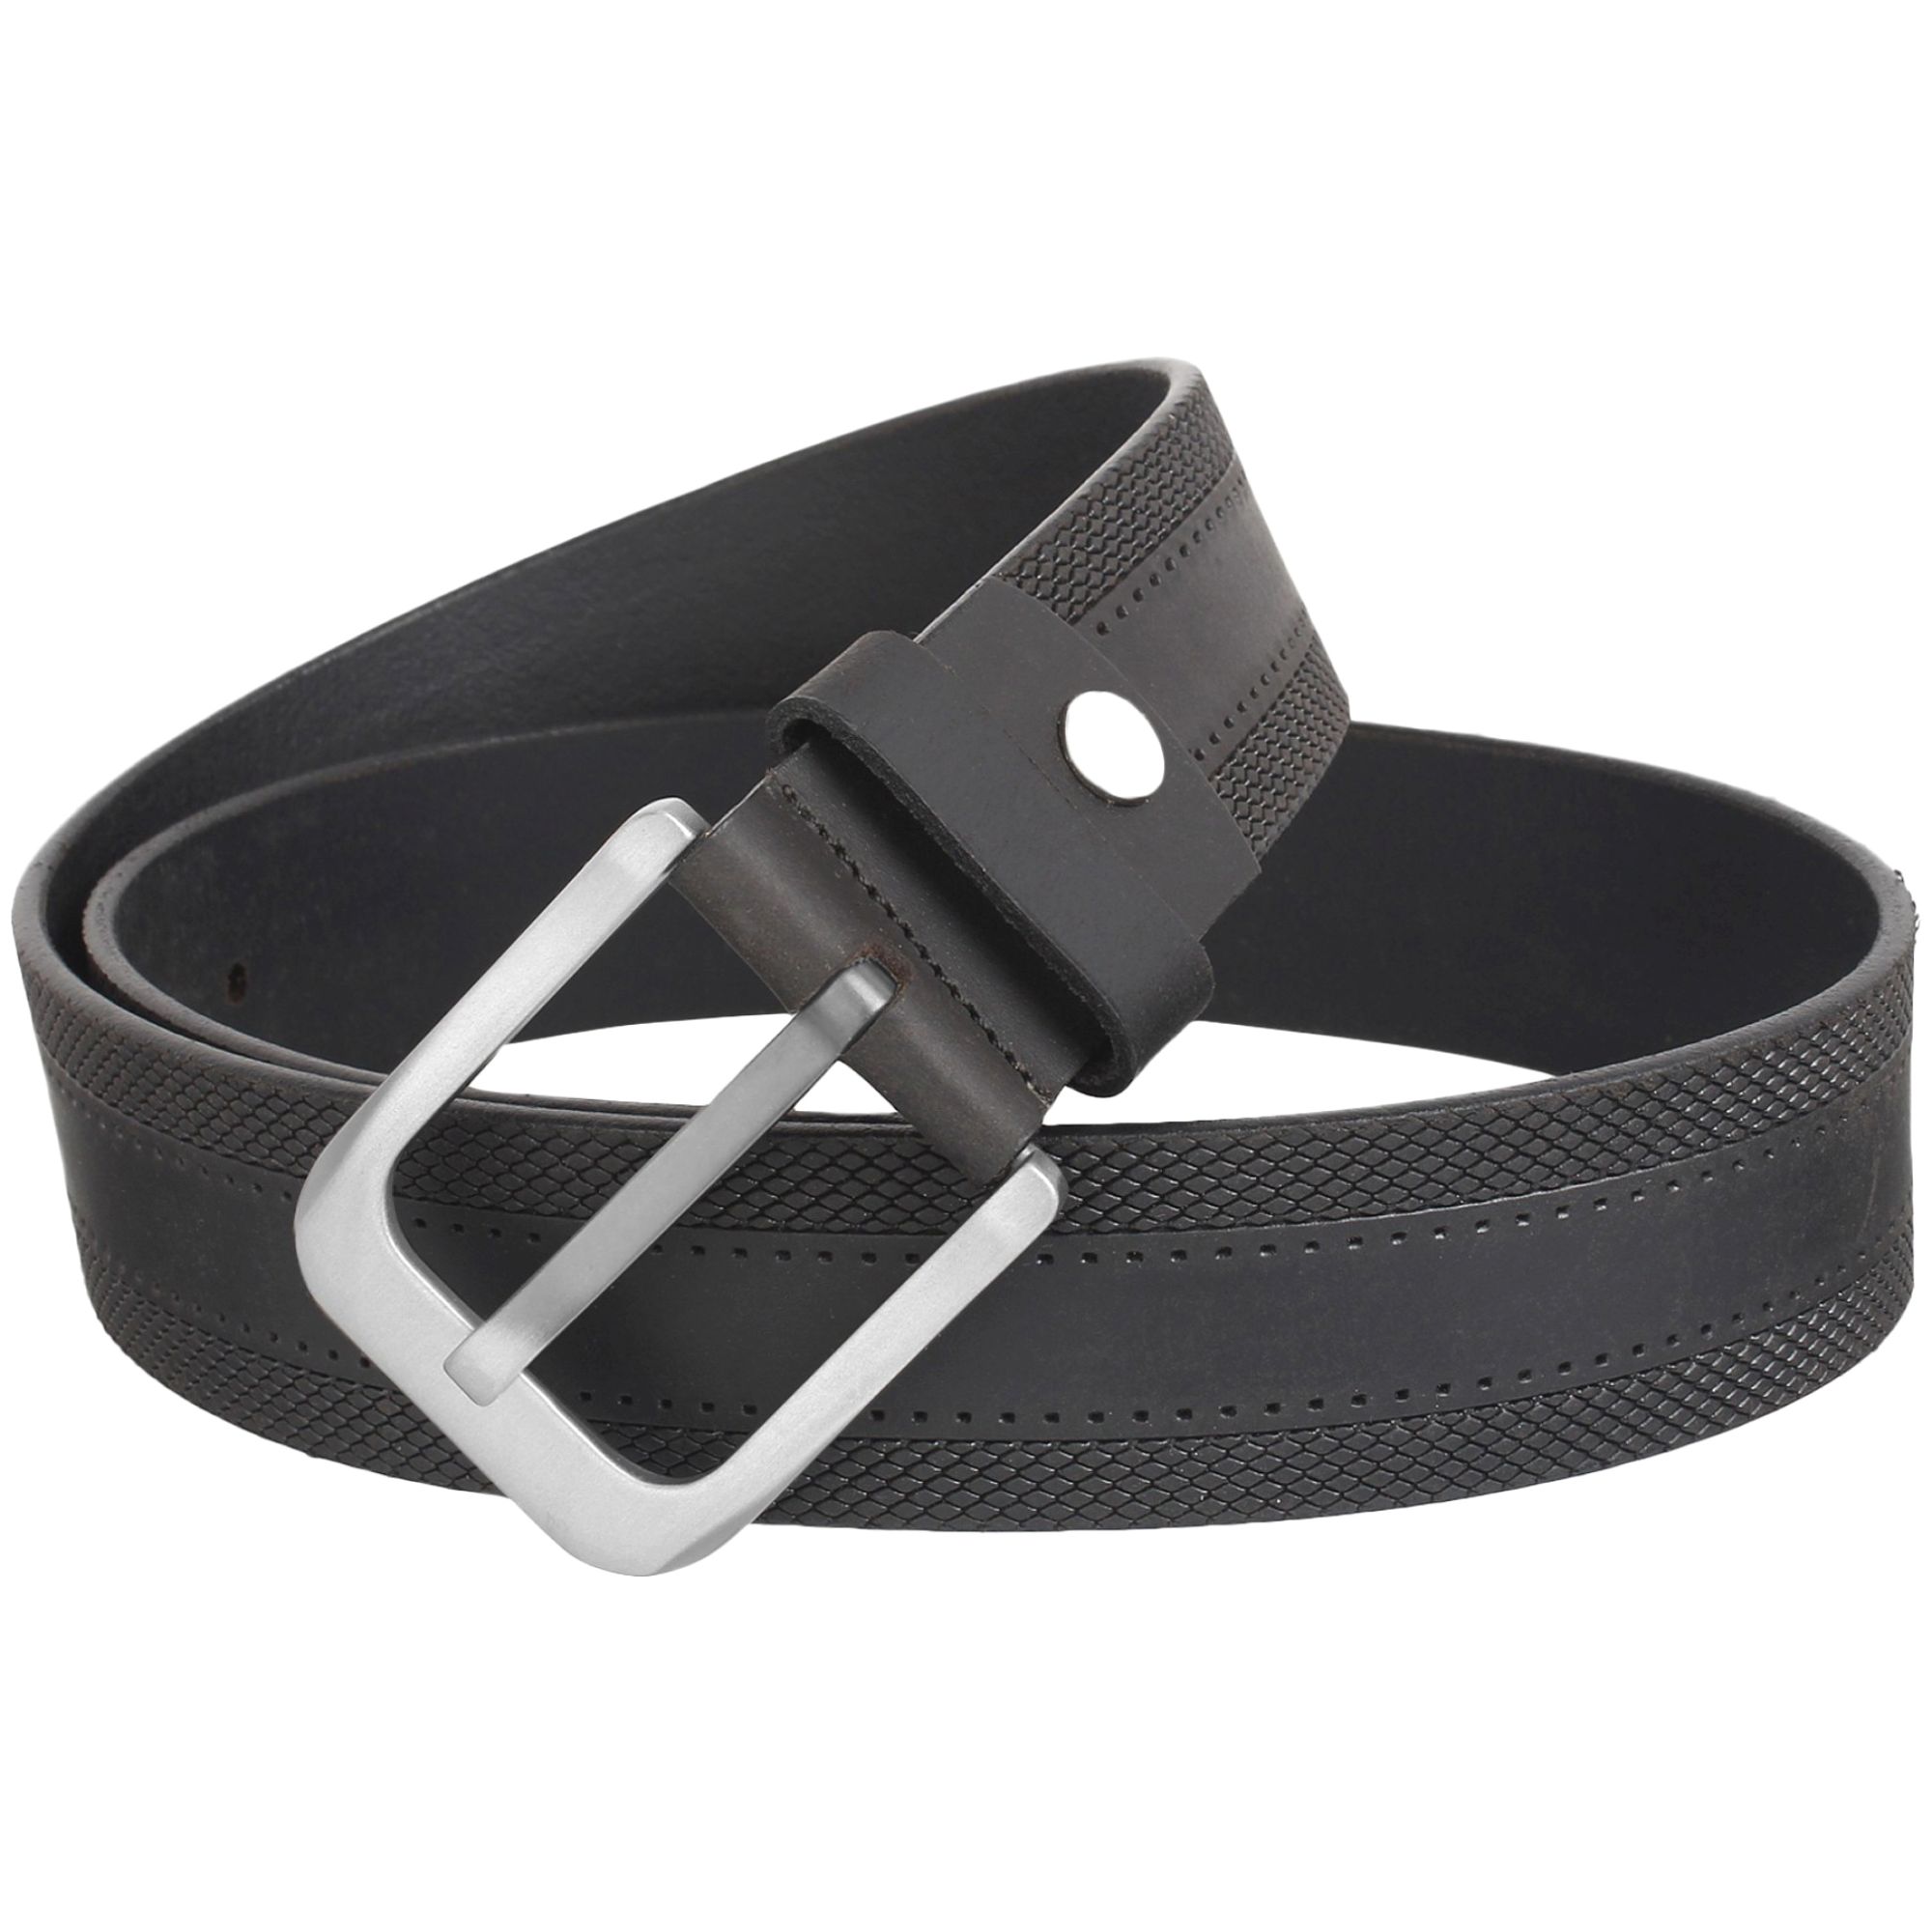 Debonair International Men's Casual Solid Genuine Leather Belt, DI934273, Black